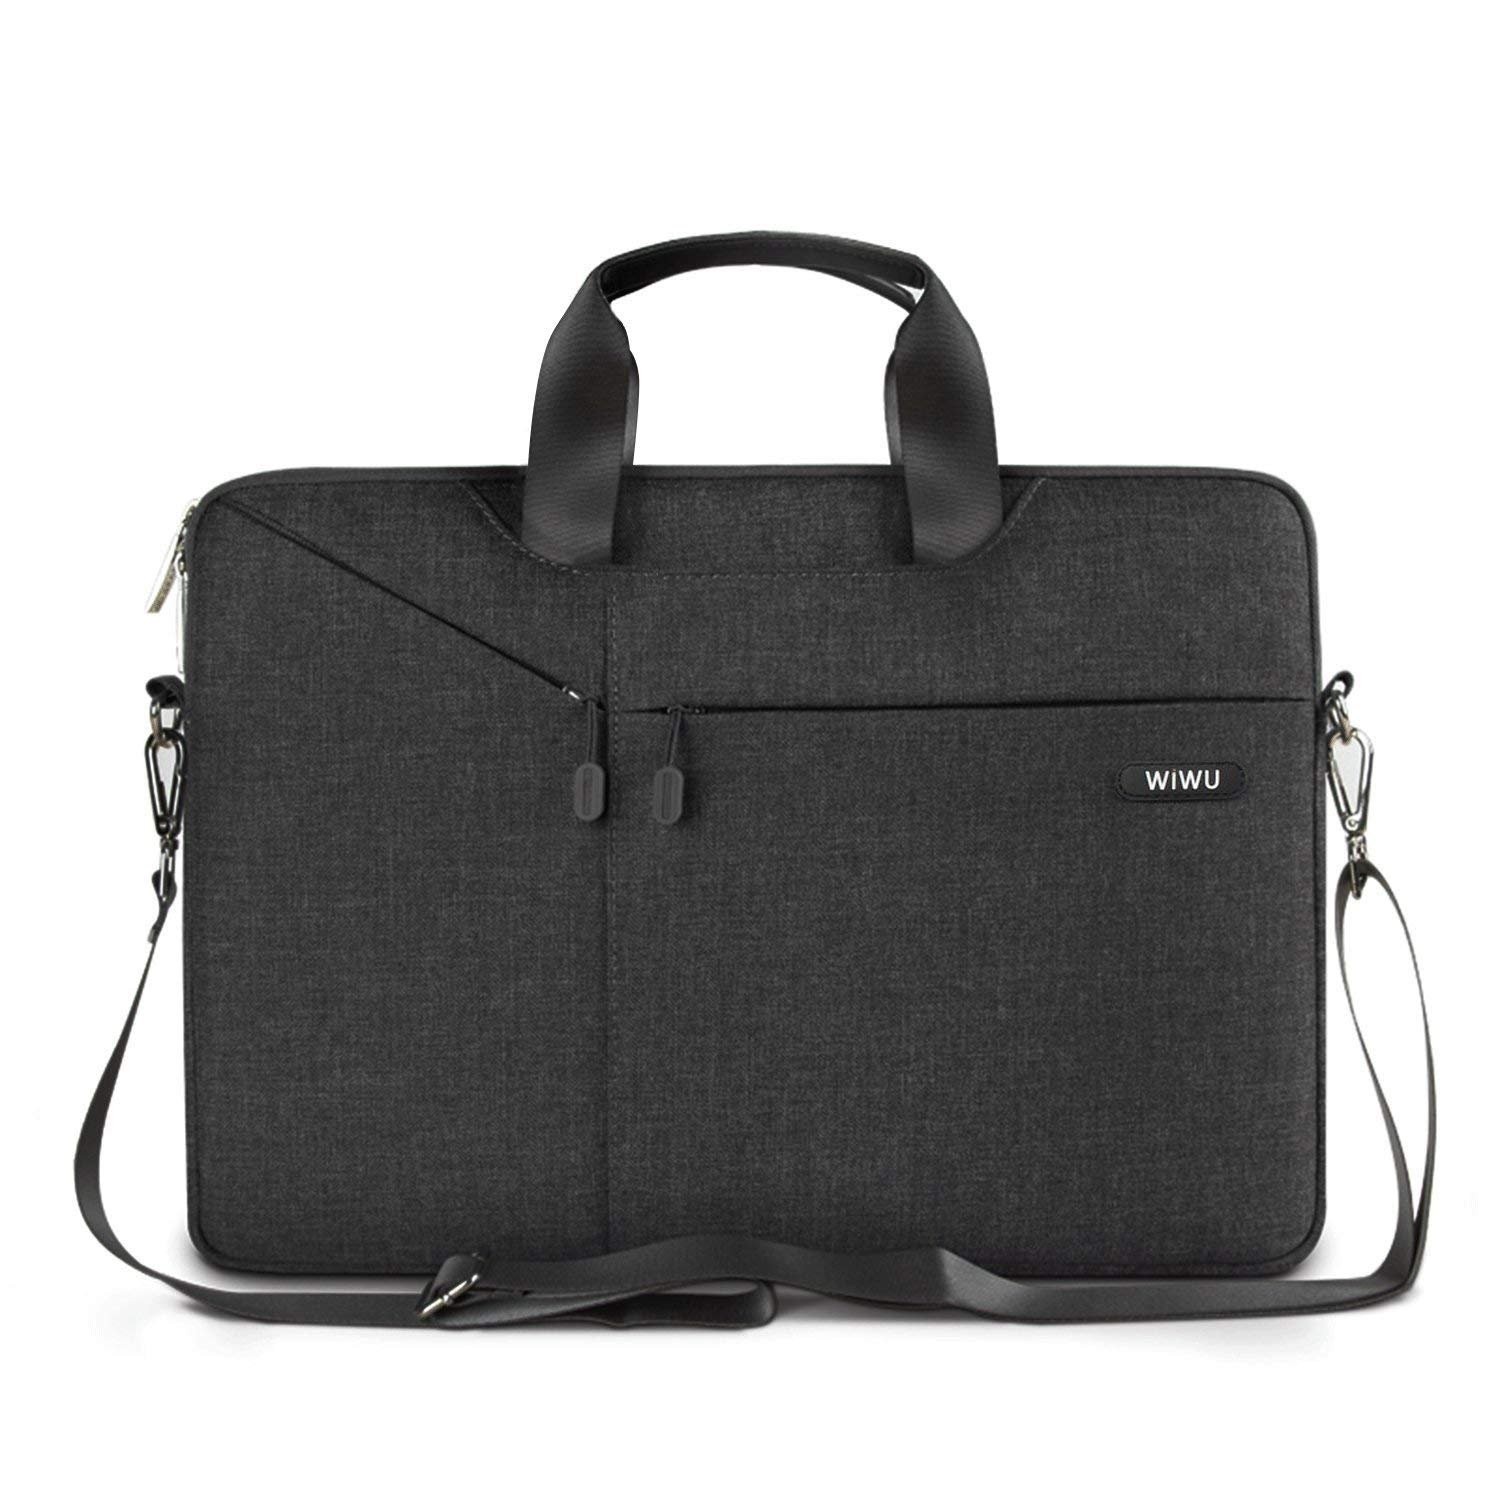 Wiwu 15.6 Inch Laptop Sleeve Case Messenger Padded Nylon Shockproof Waterproof Shoulder Bag (Black)